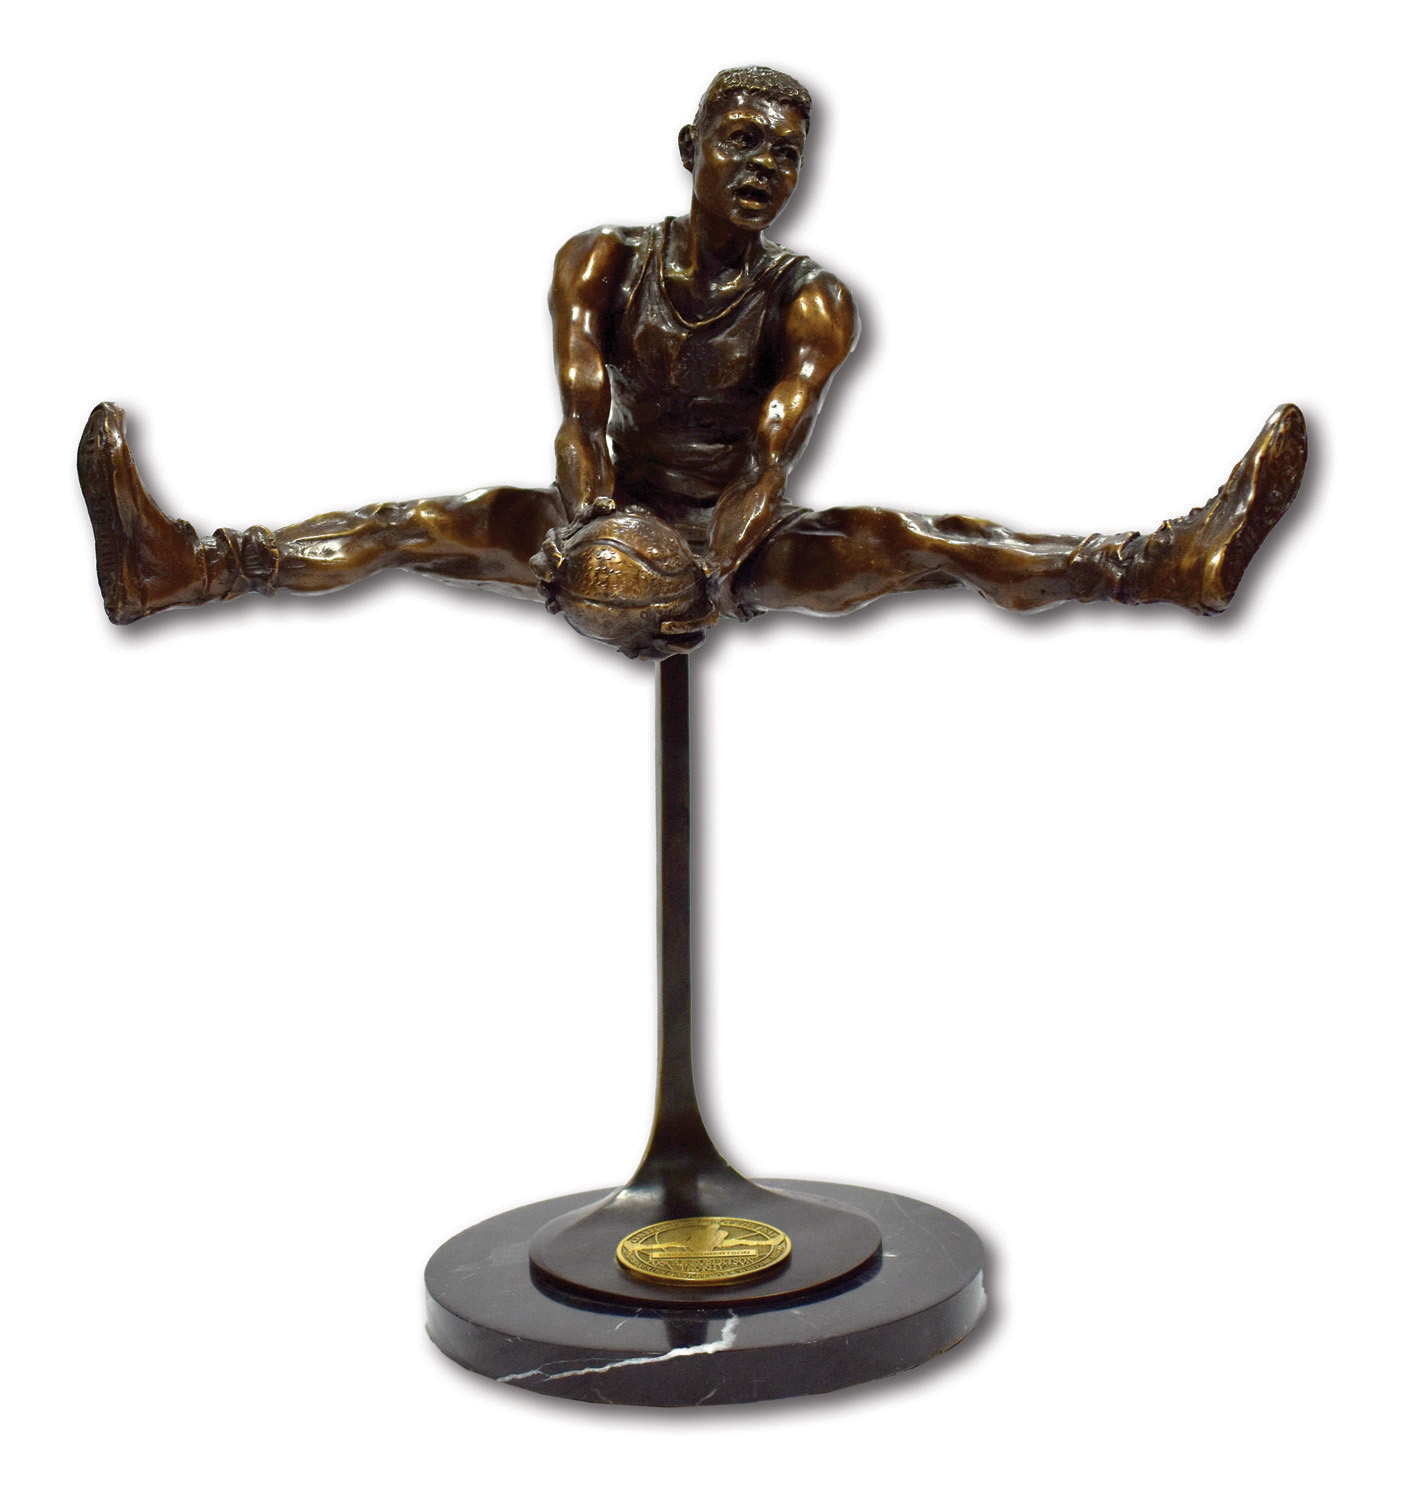 Oscar Robertson memorabilia auction items